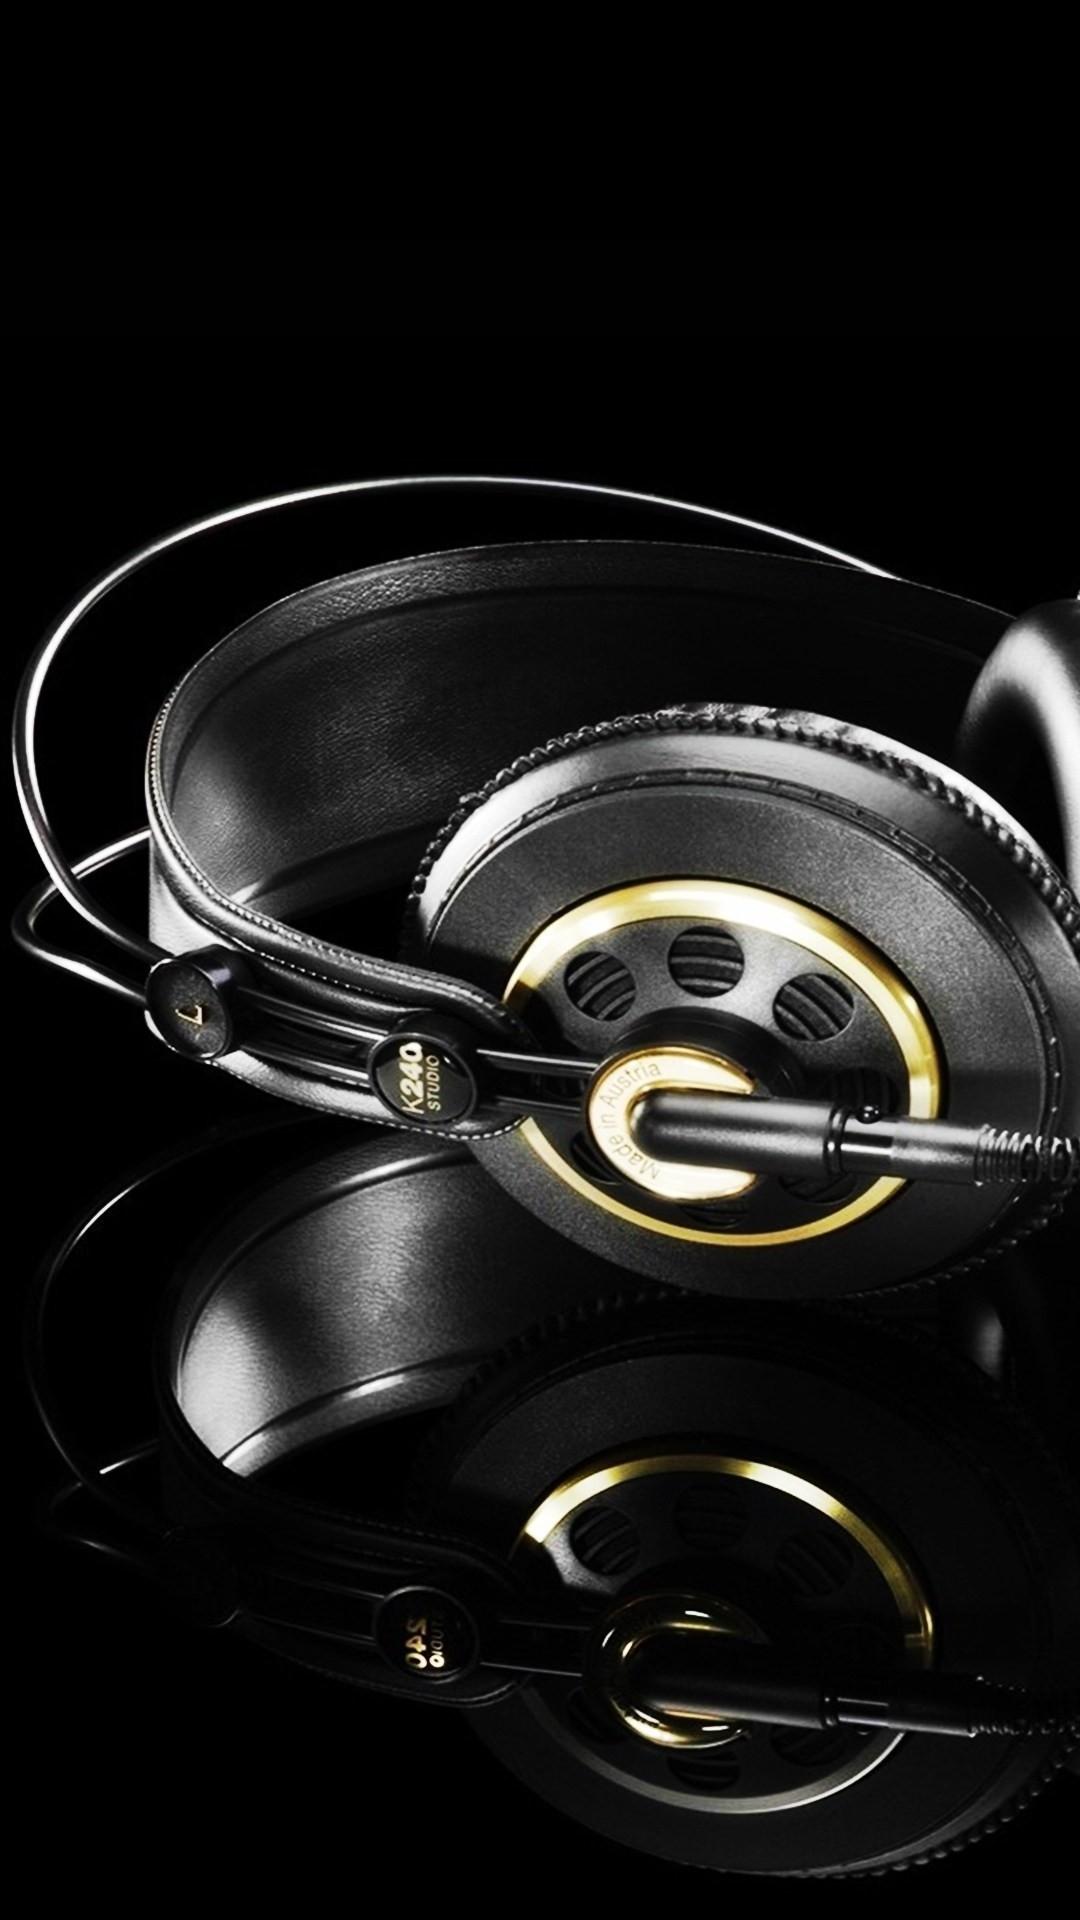 Studio Headphones Black Gold Android Wallpaper free download